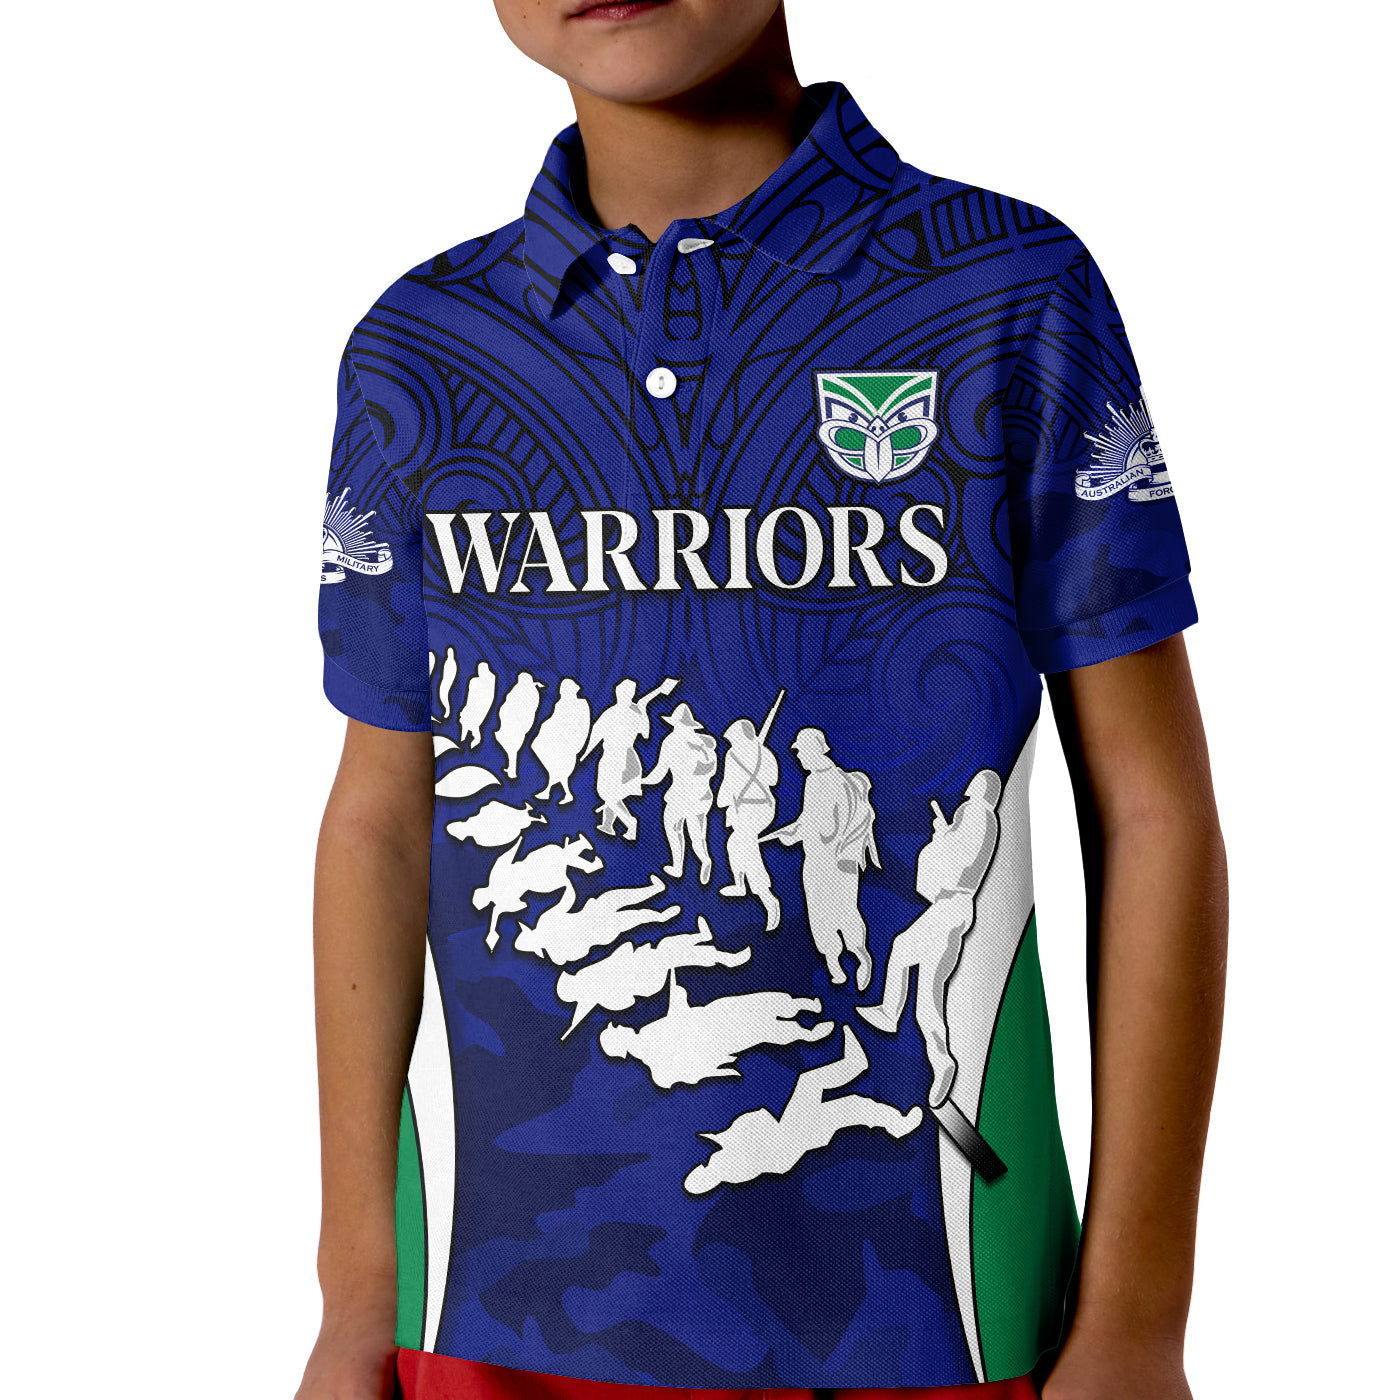 warriors-anzac-2022-polo-shirt-maori-pattern-always-remember-them